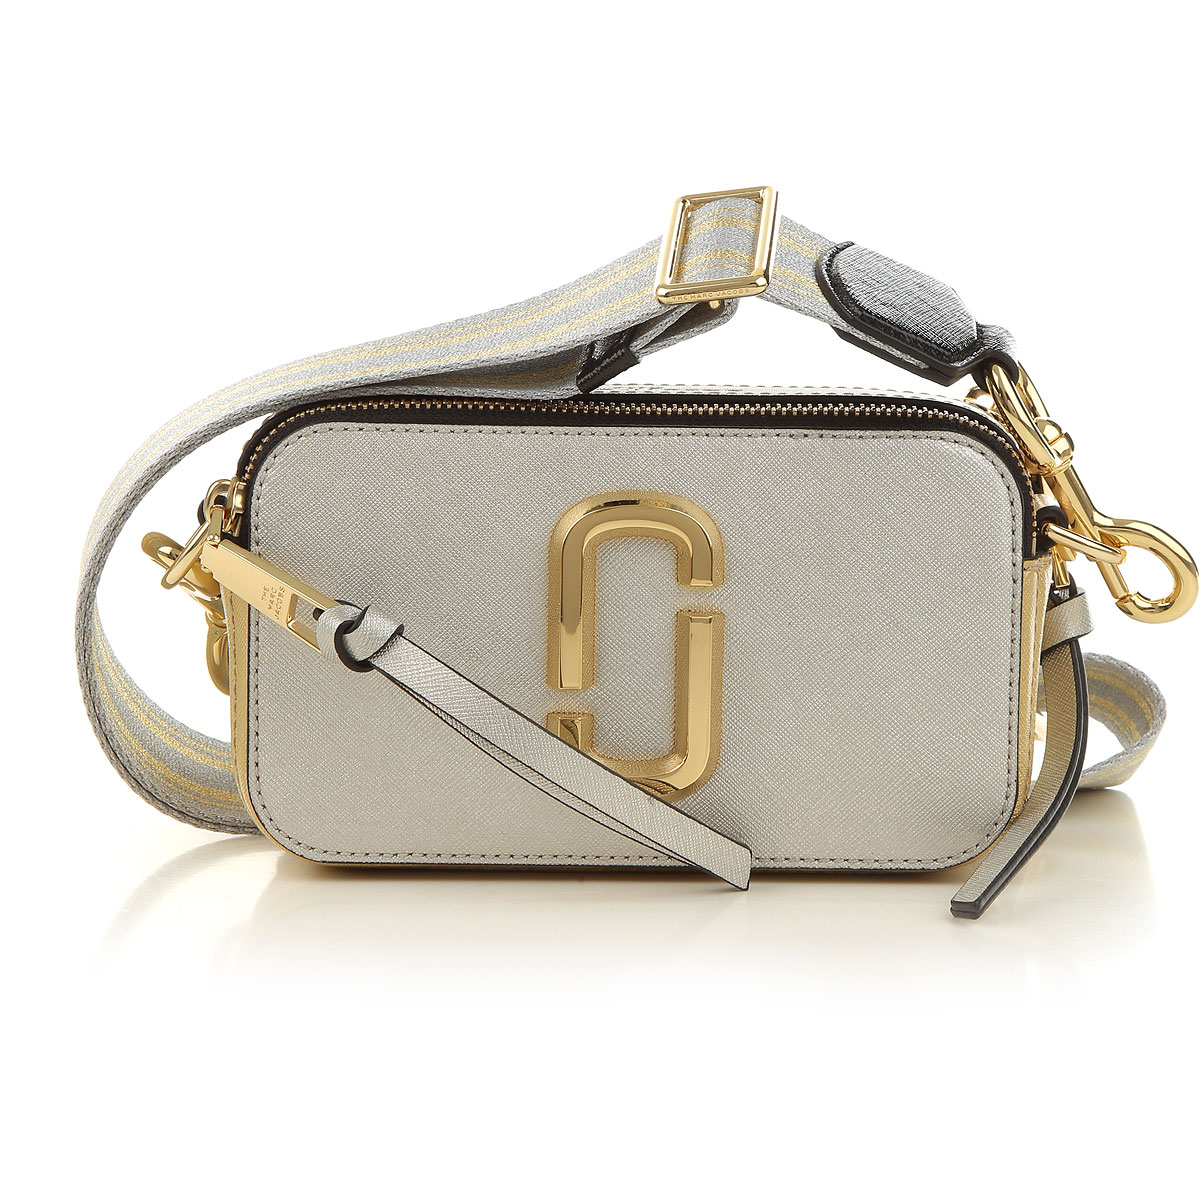 Handbags Marc Jacobs, Style code: h129l01pf21-044-C109